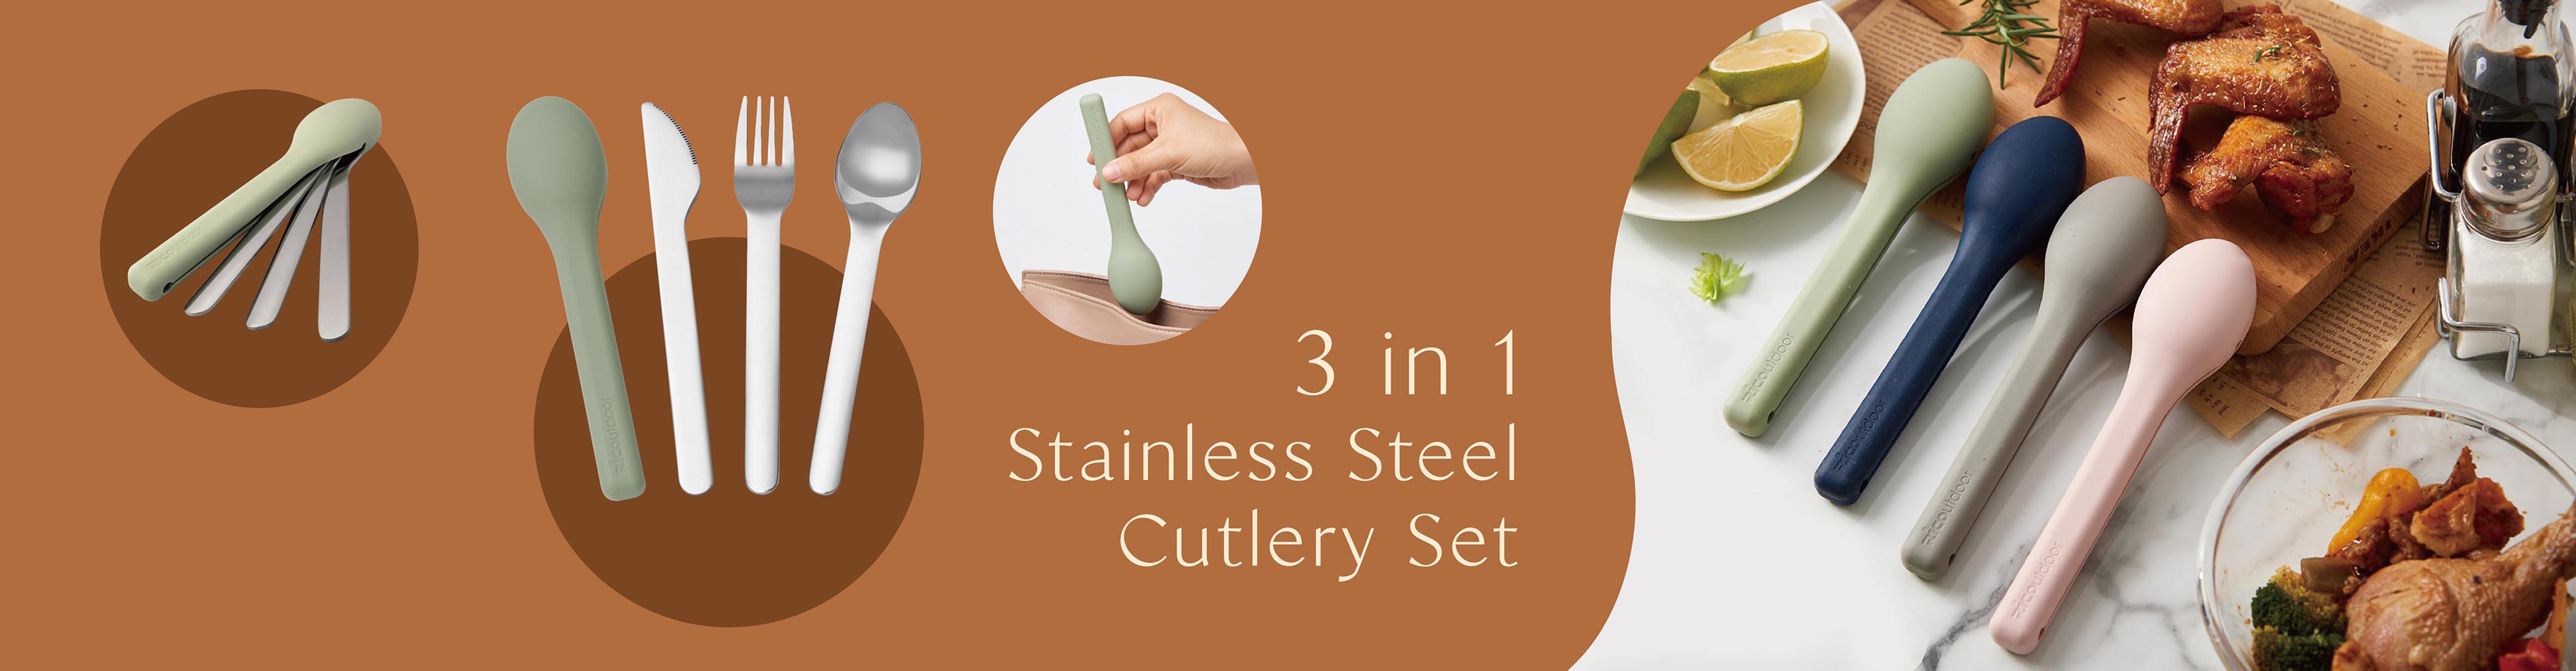 cutlery set -banner